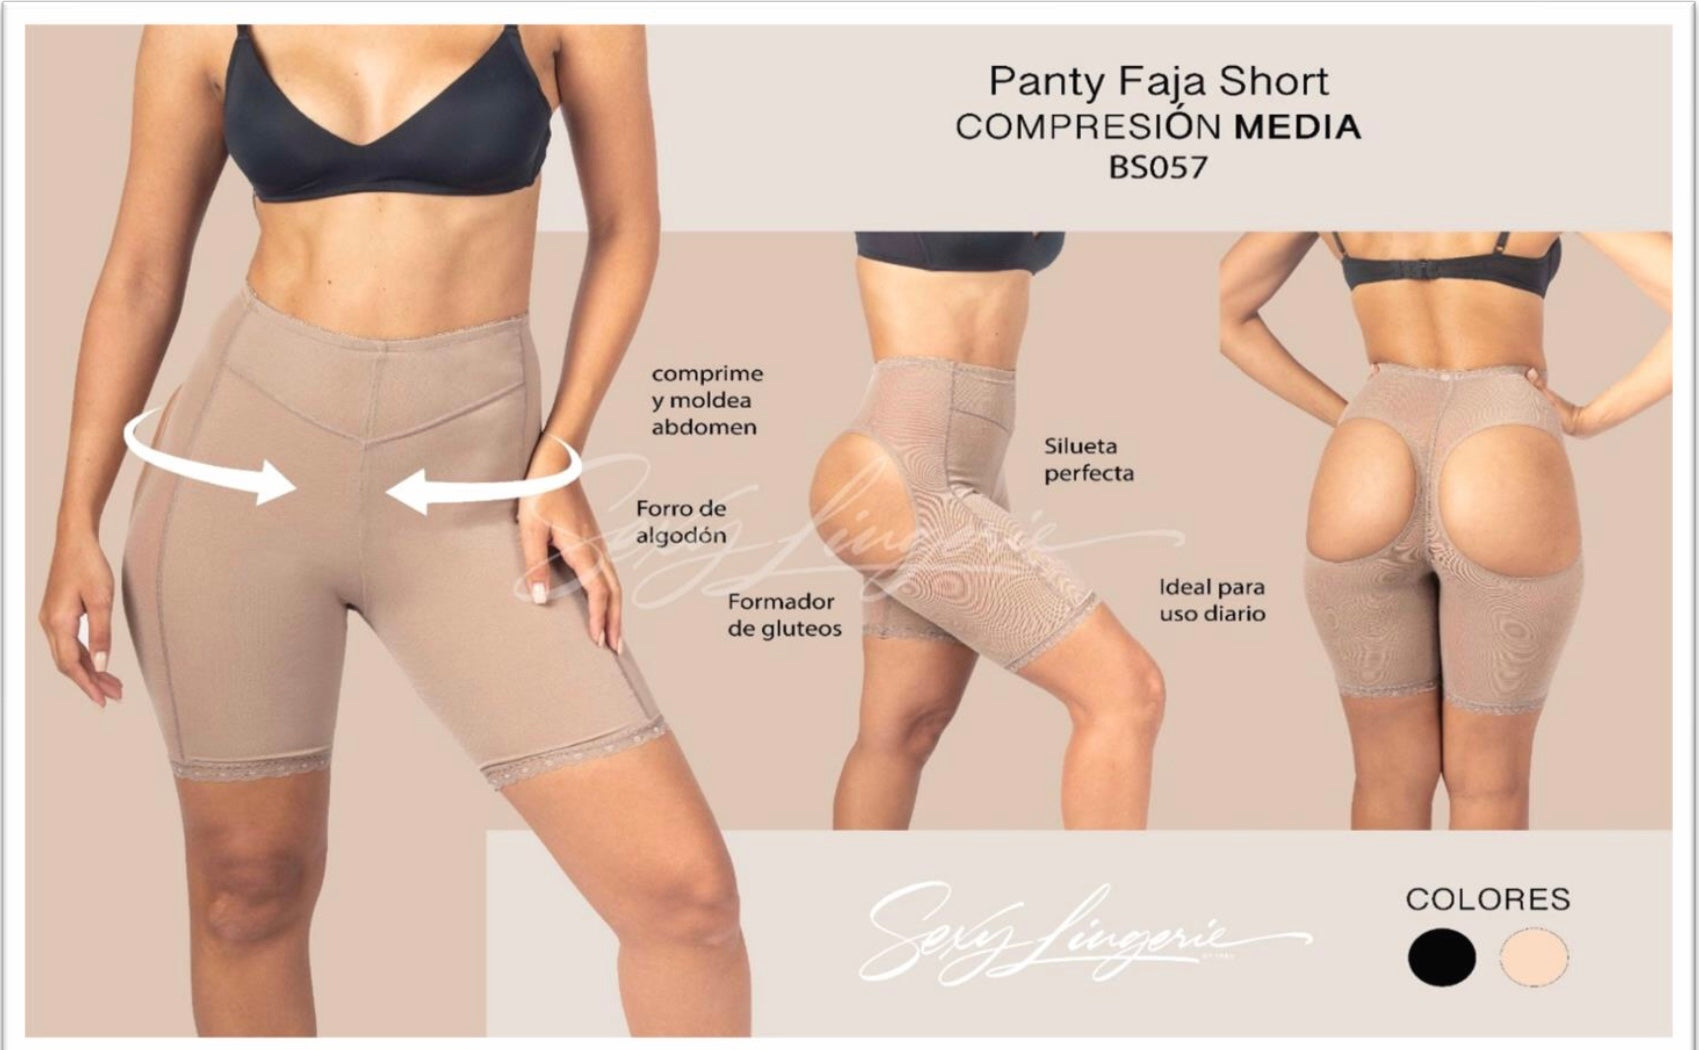 Sexy Columbian Panty Faja Plus with Compression Shape Contouring Fabric